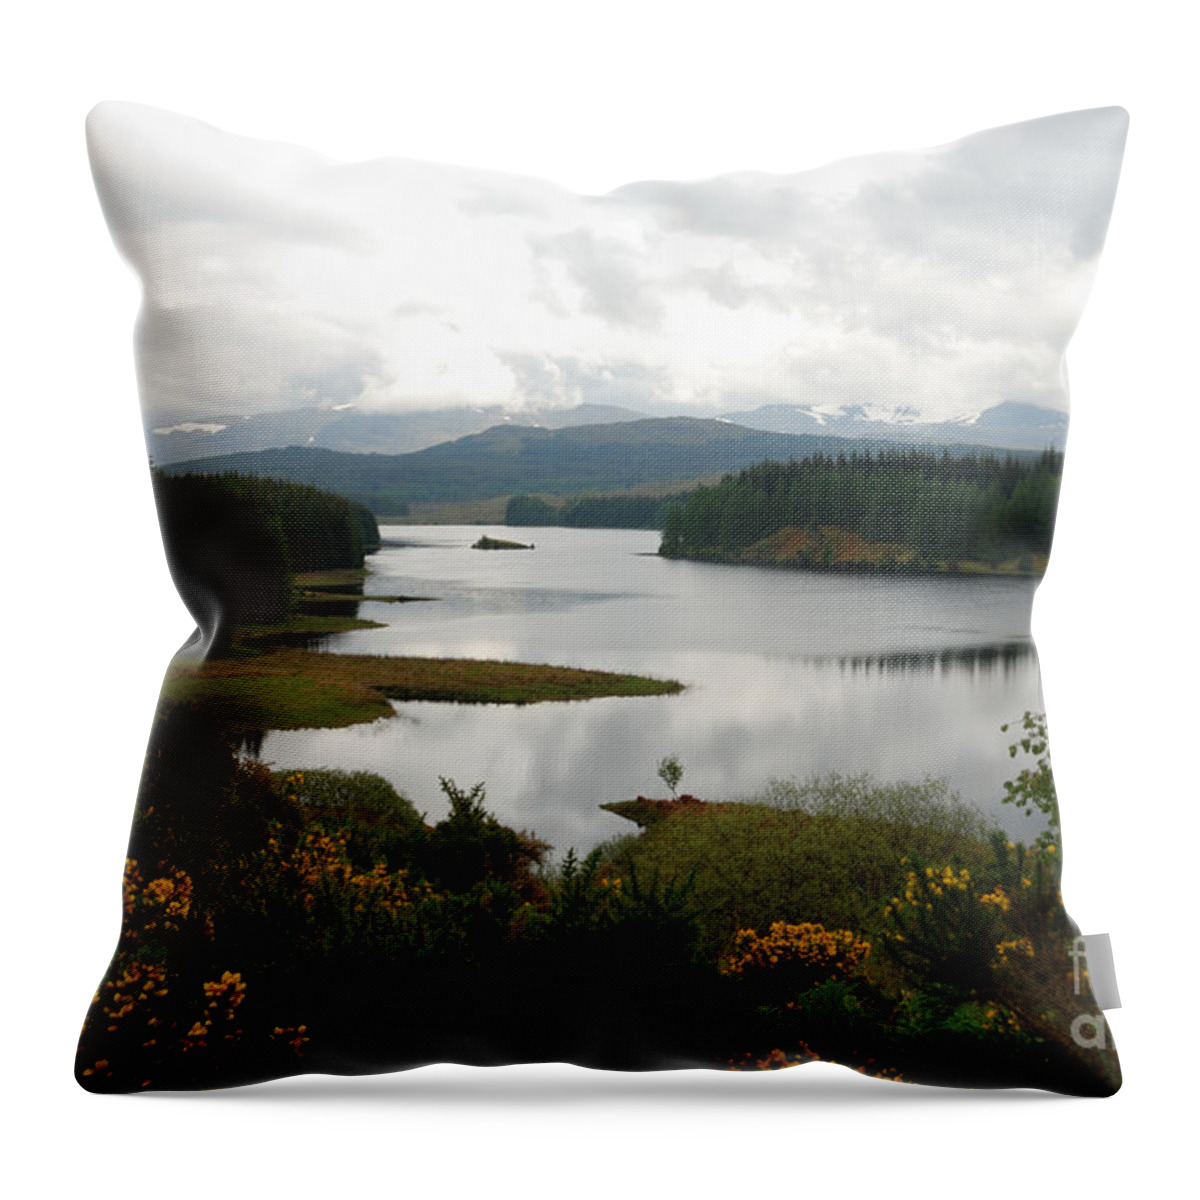 Loch Scotland Scottish Wild Heather Landscape Throw Pillow featuring the photograph Scottish Loch by Richard Gibb